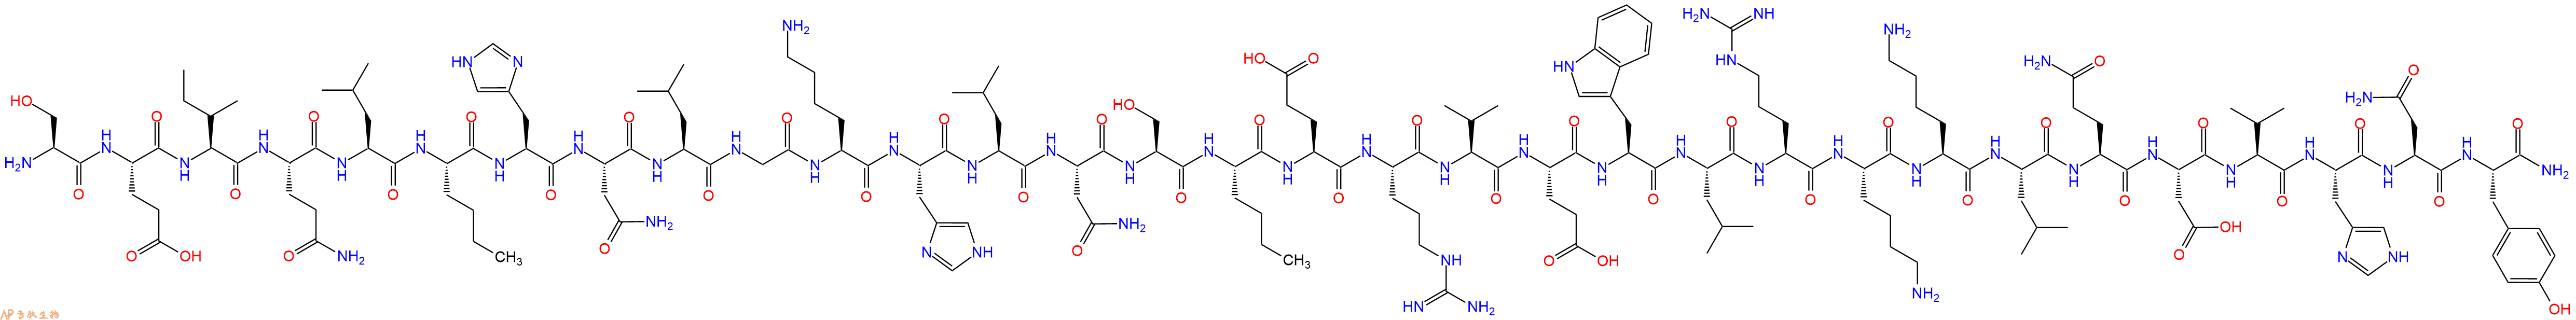 专肽生物产品[Nle818Tyr34]Parathyroid Hormone(3-34), amidehuman